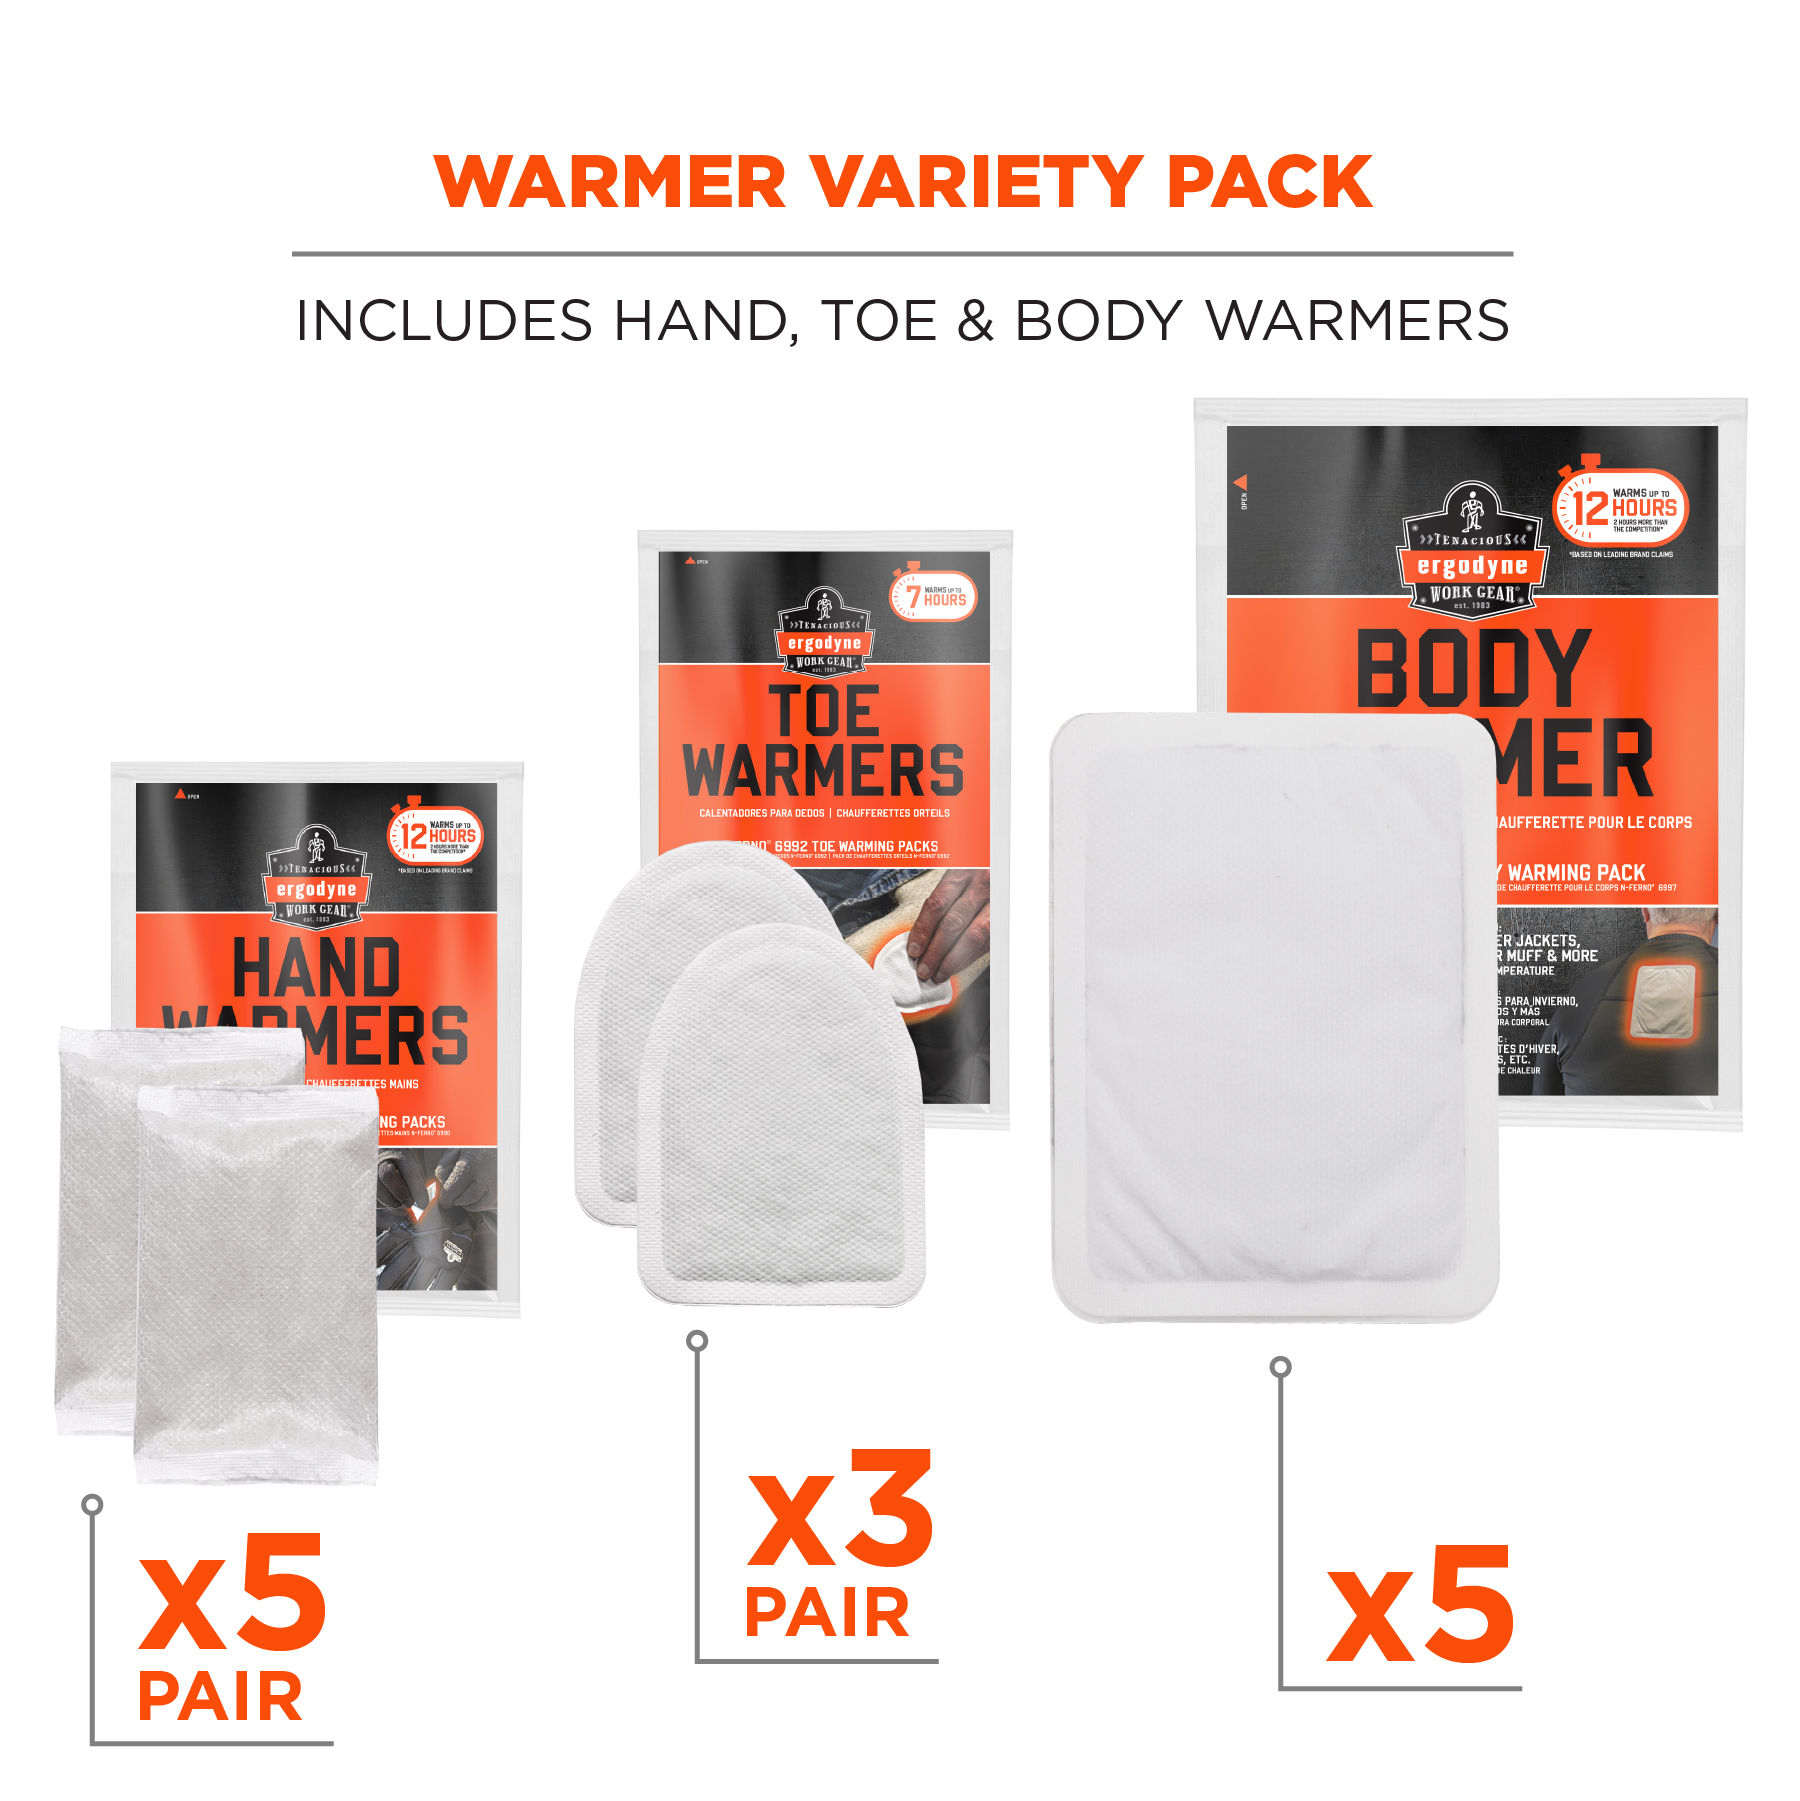 16994-6994-body-warmer-variety-pack-warmer-variety-pack